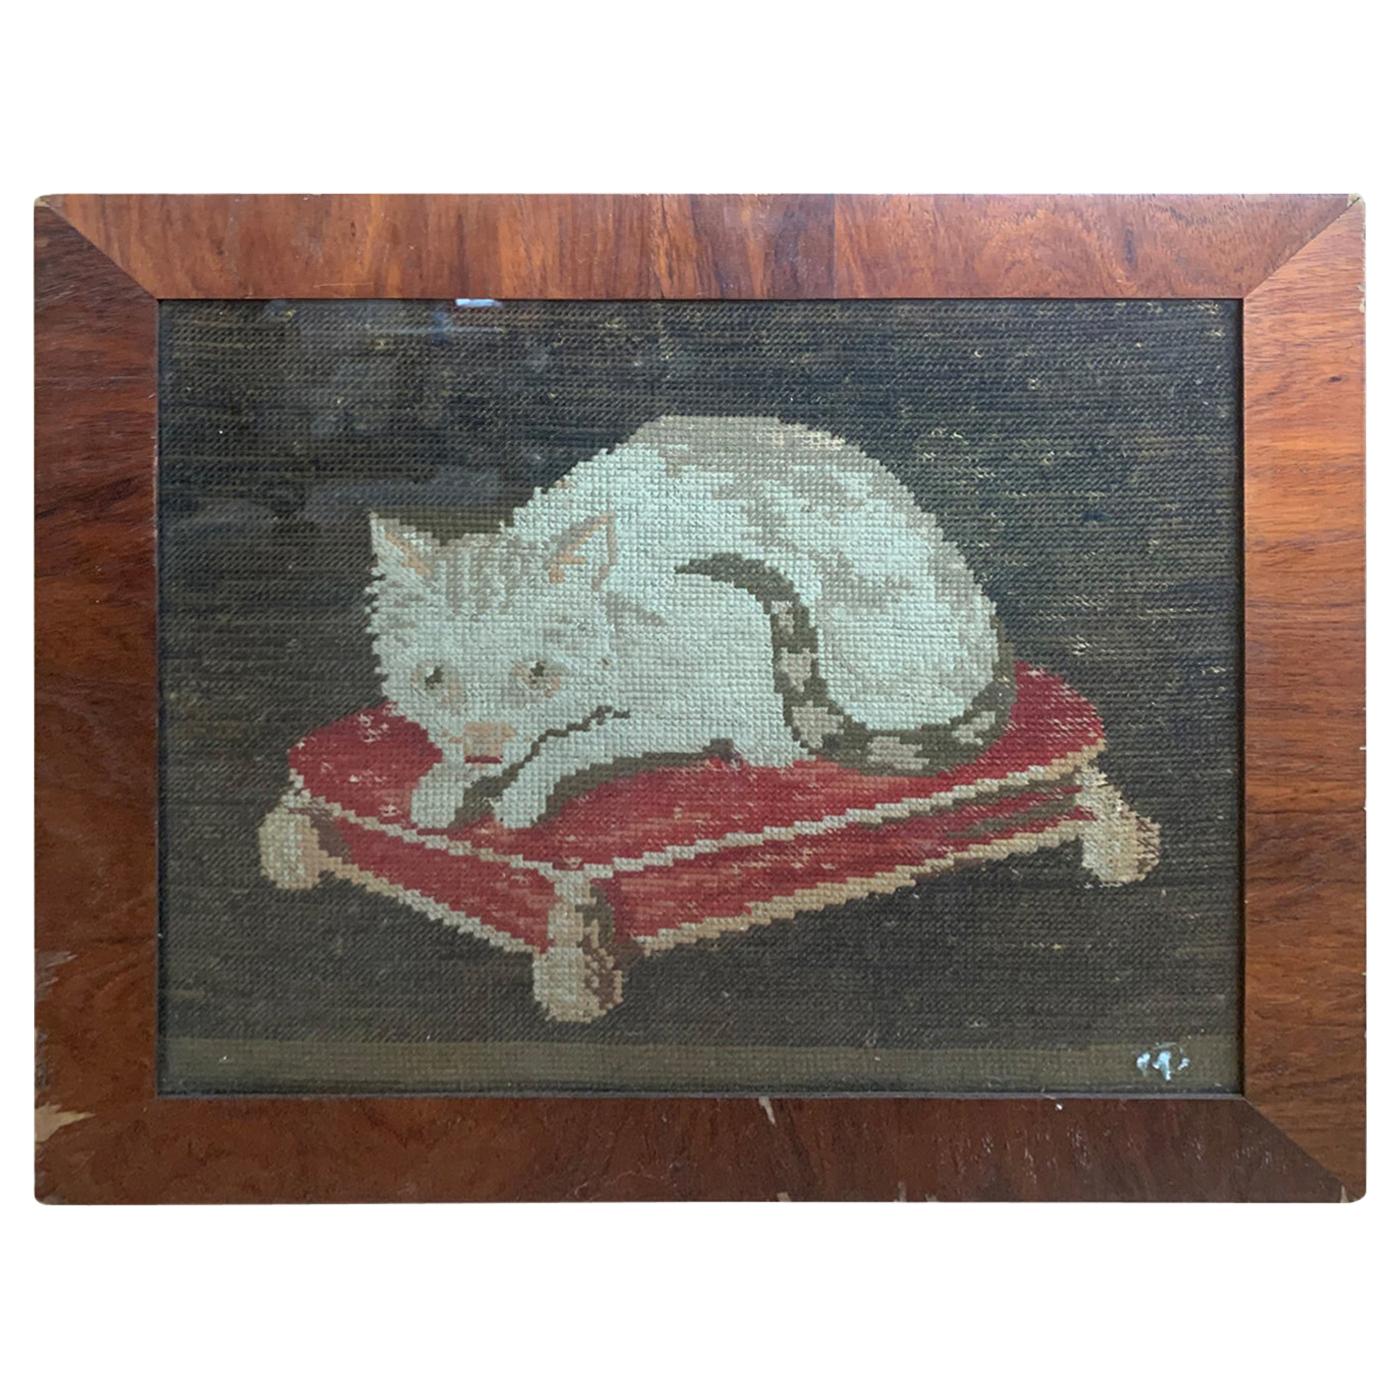 19th Century Needlework Cat in Burled Wood Frame